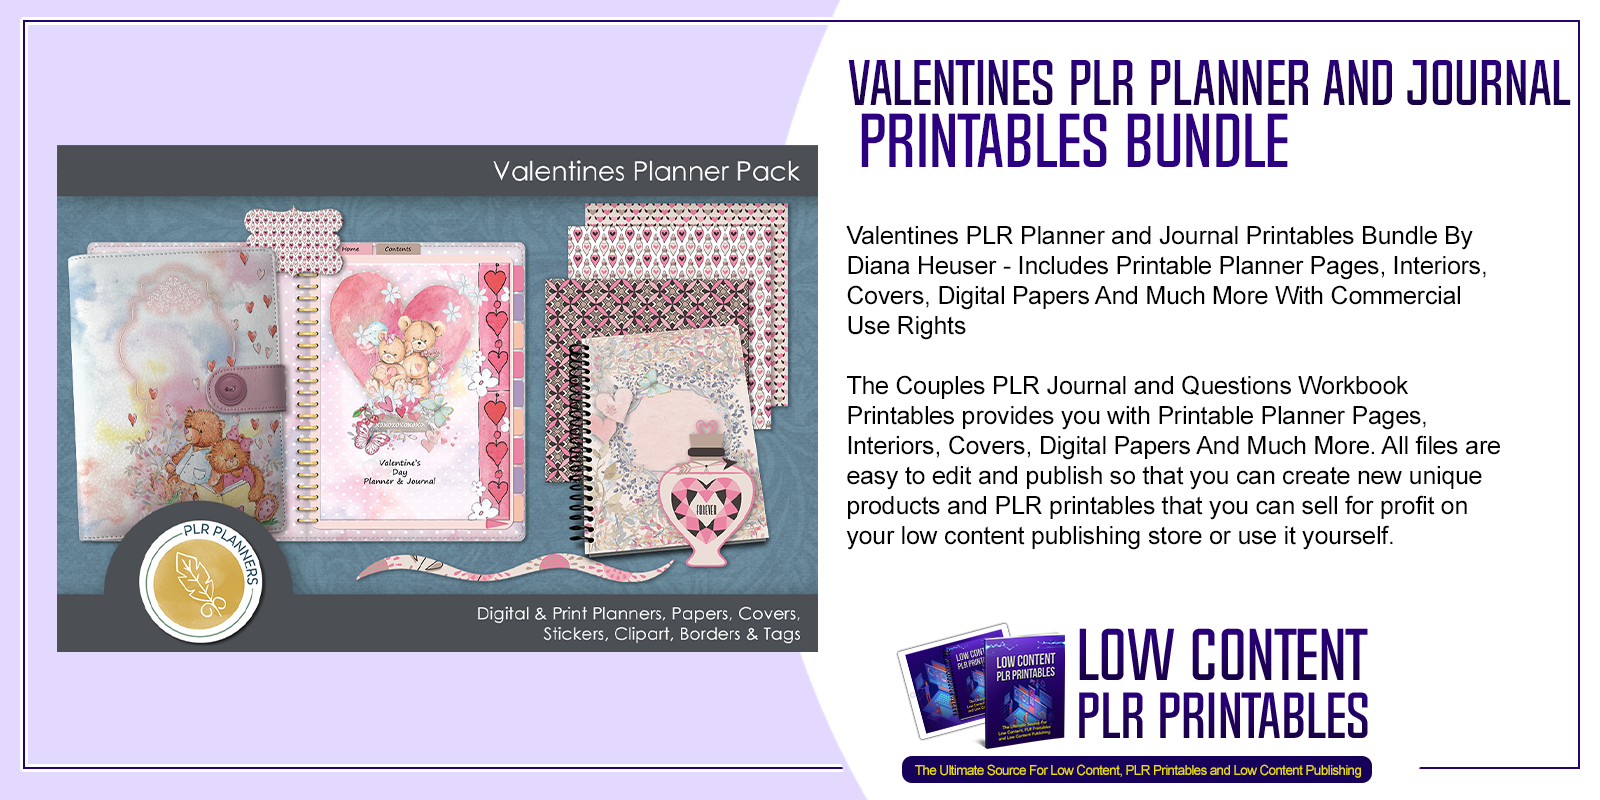 Valentines PLR Planner and Journal Printables Bundle